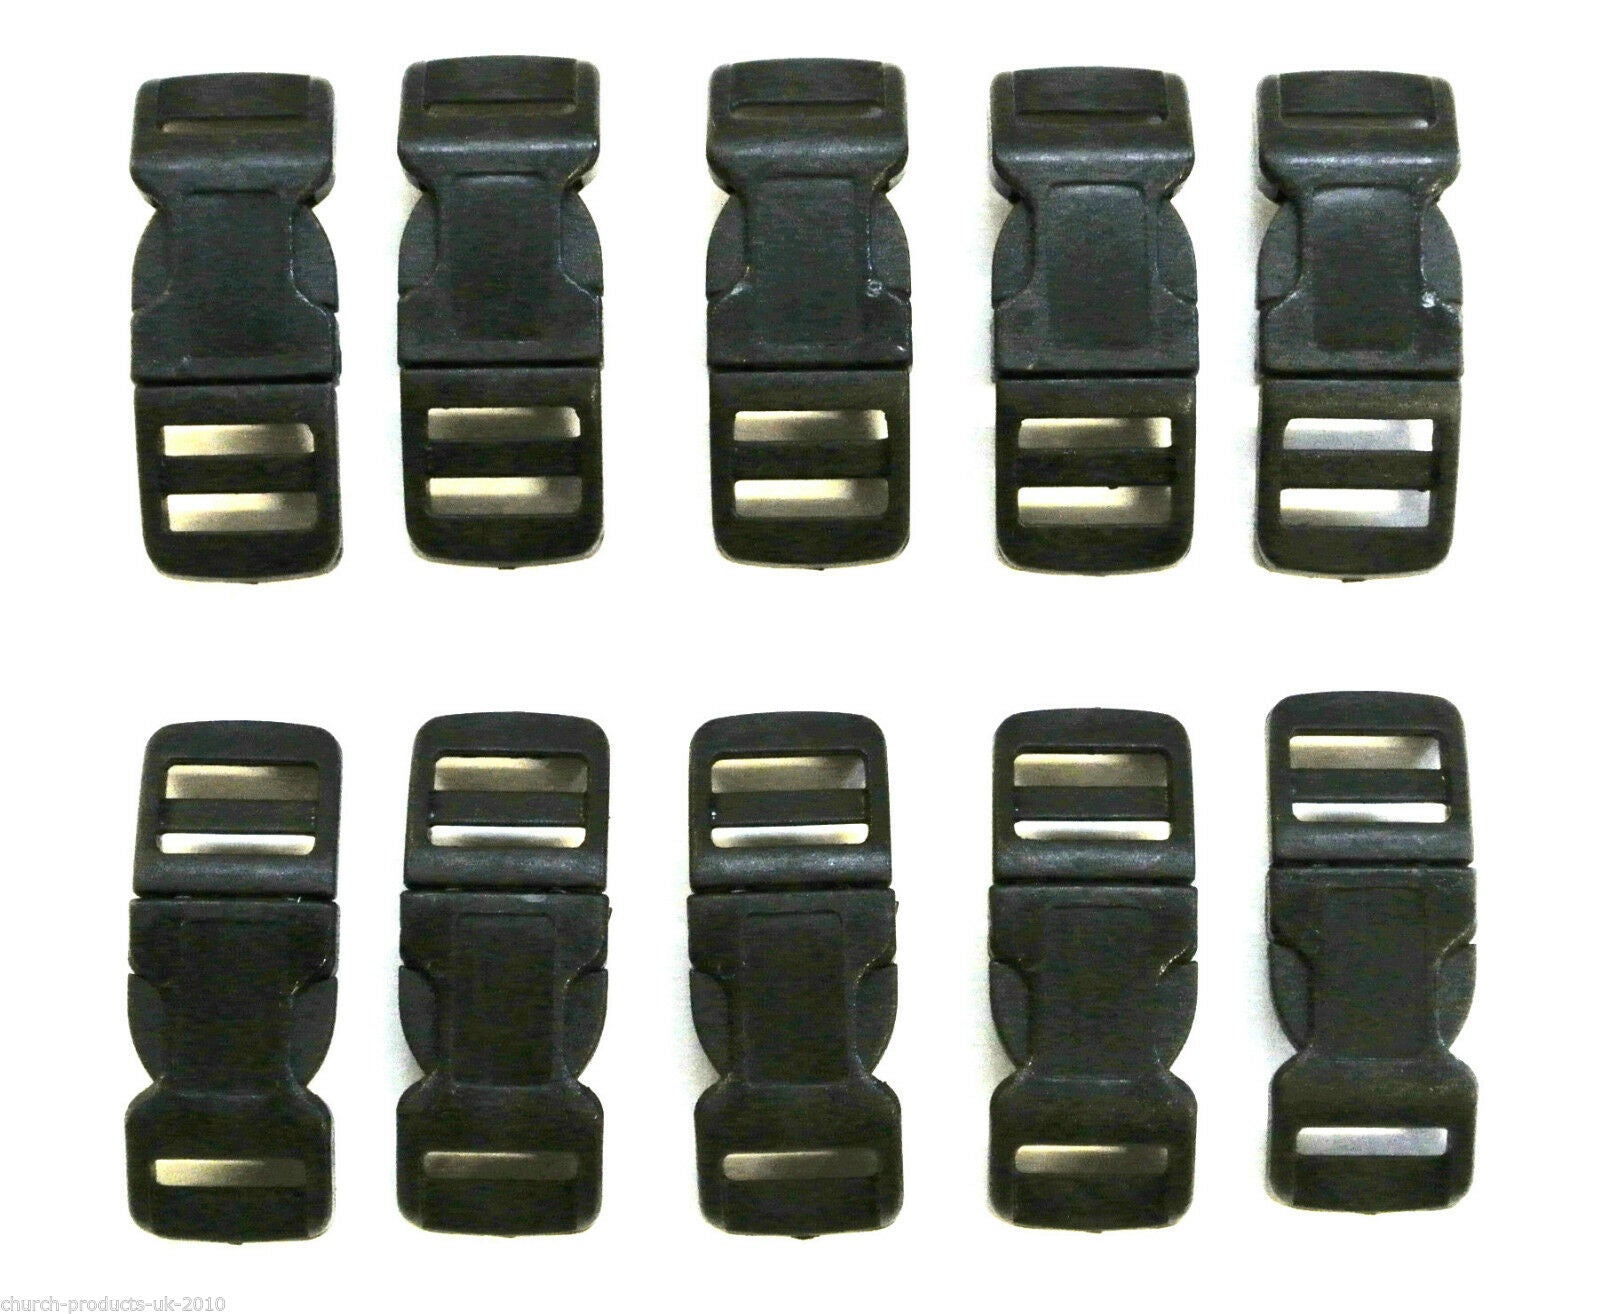 32mm Black Plastic Side Quick Release Buckle Clip – Cord Strap